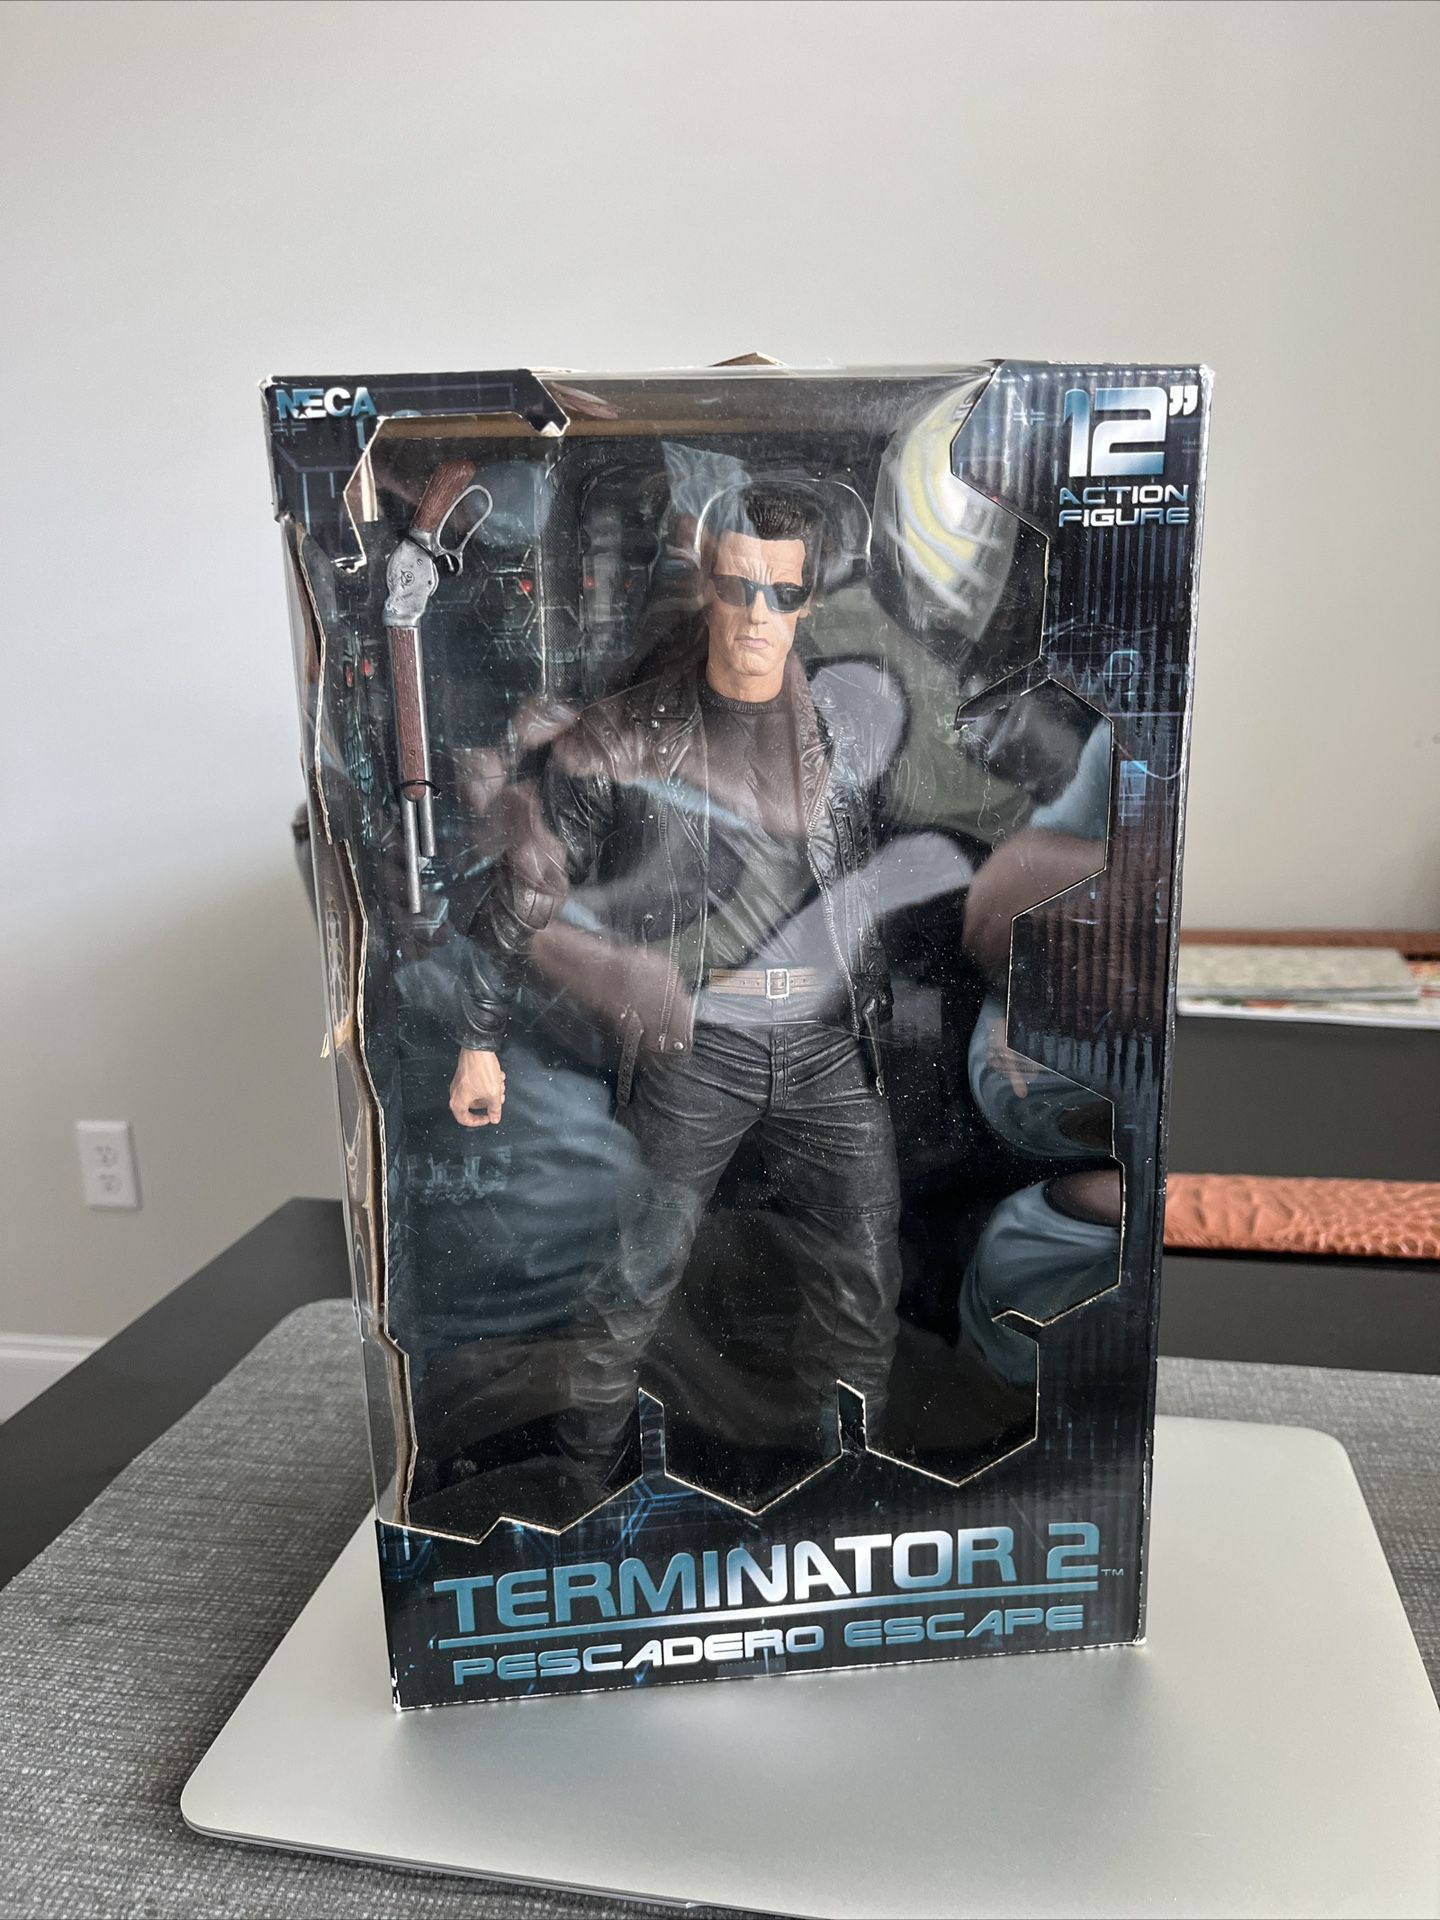 NECA 12” Action Figure Terminator 2